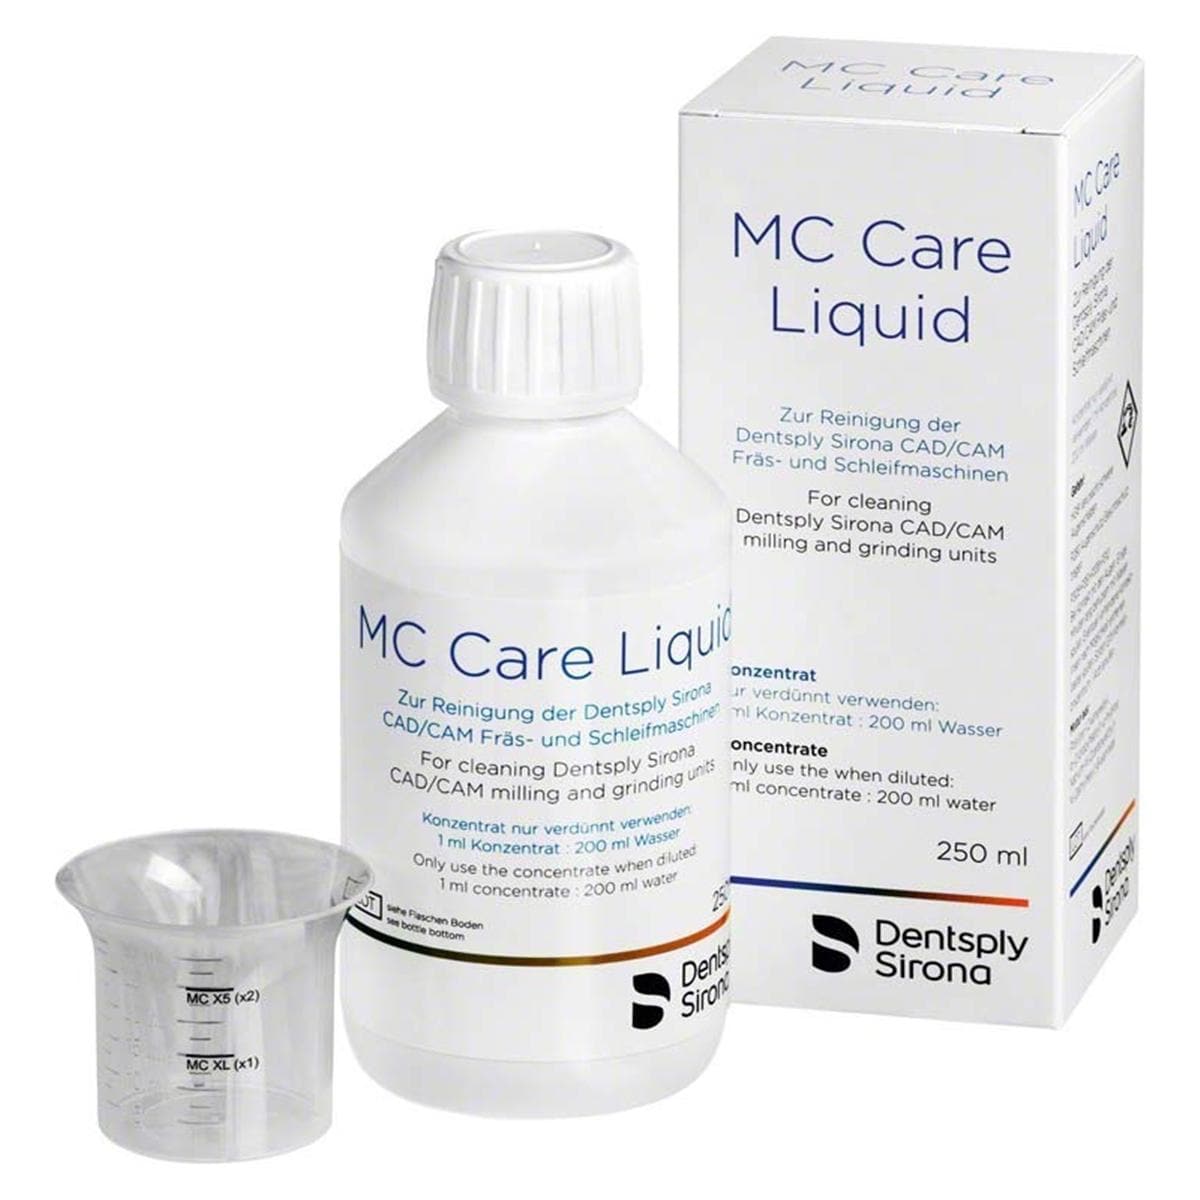 MC Care Liquid - Flacon, 250 ml